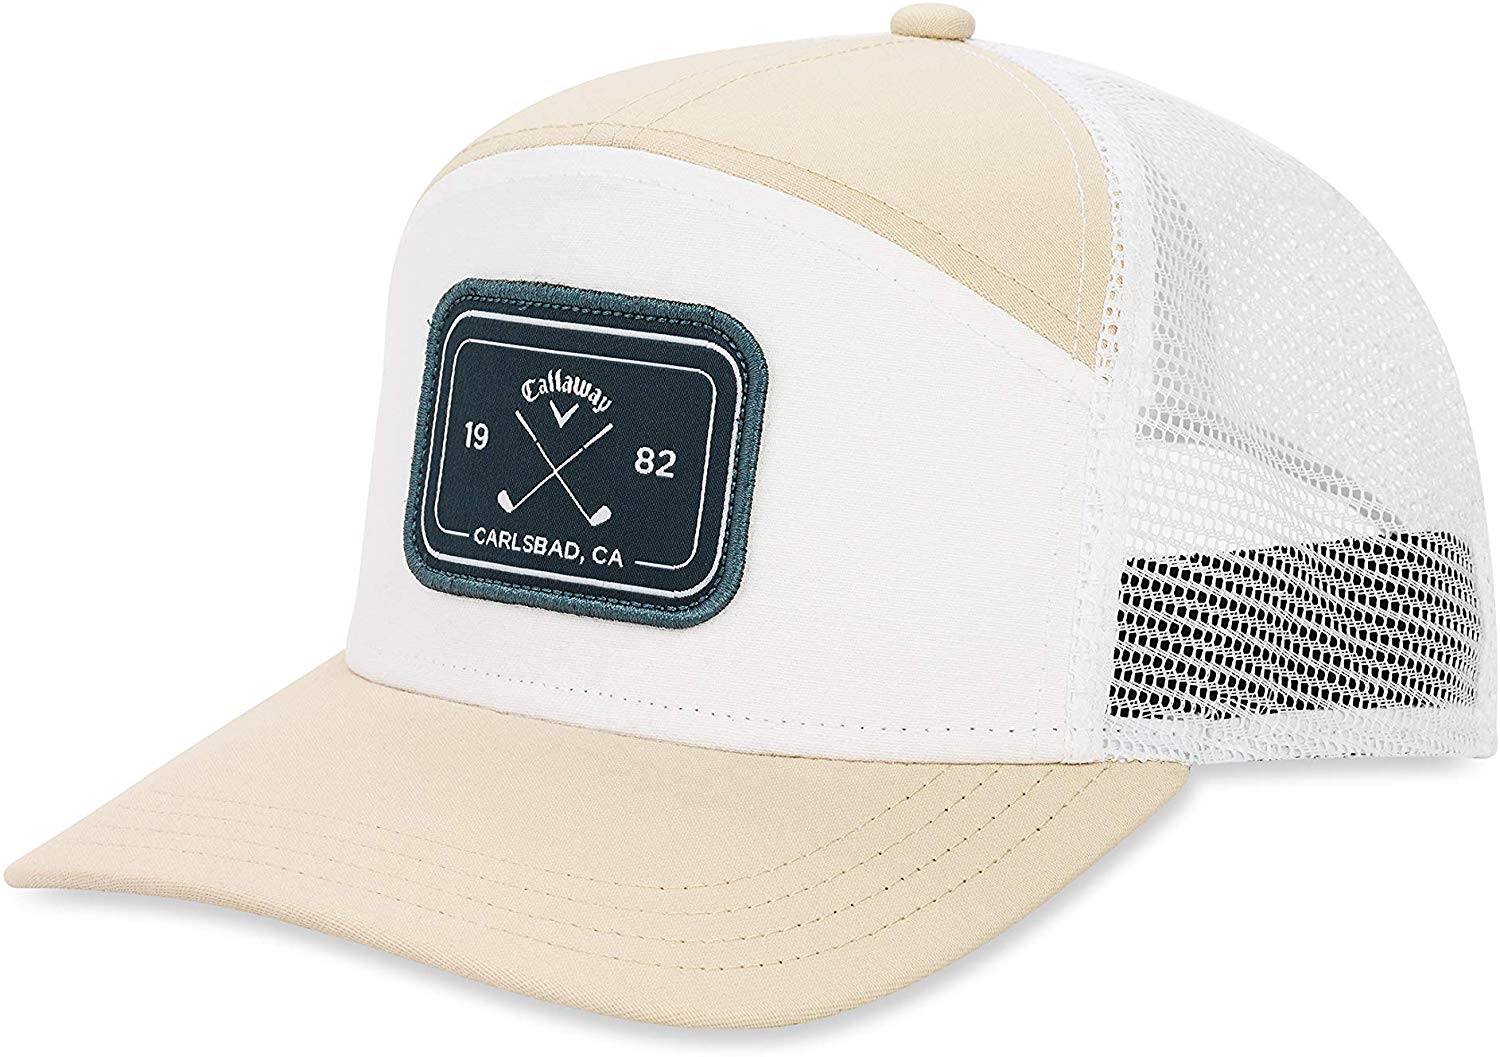 Mens Callaway 2019 6 Panel Trucker Golf Hats